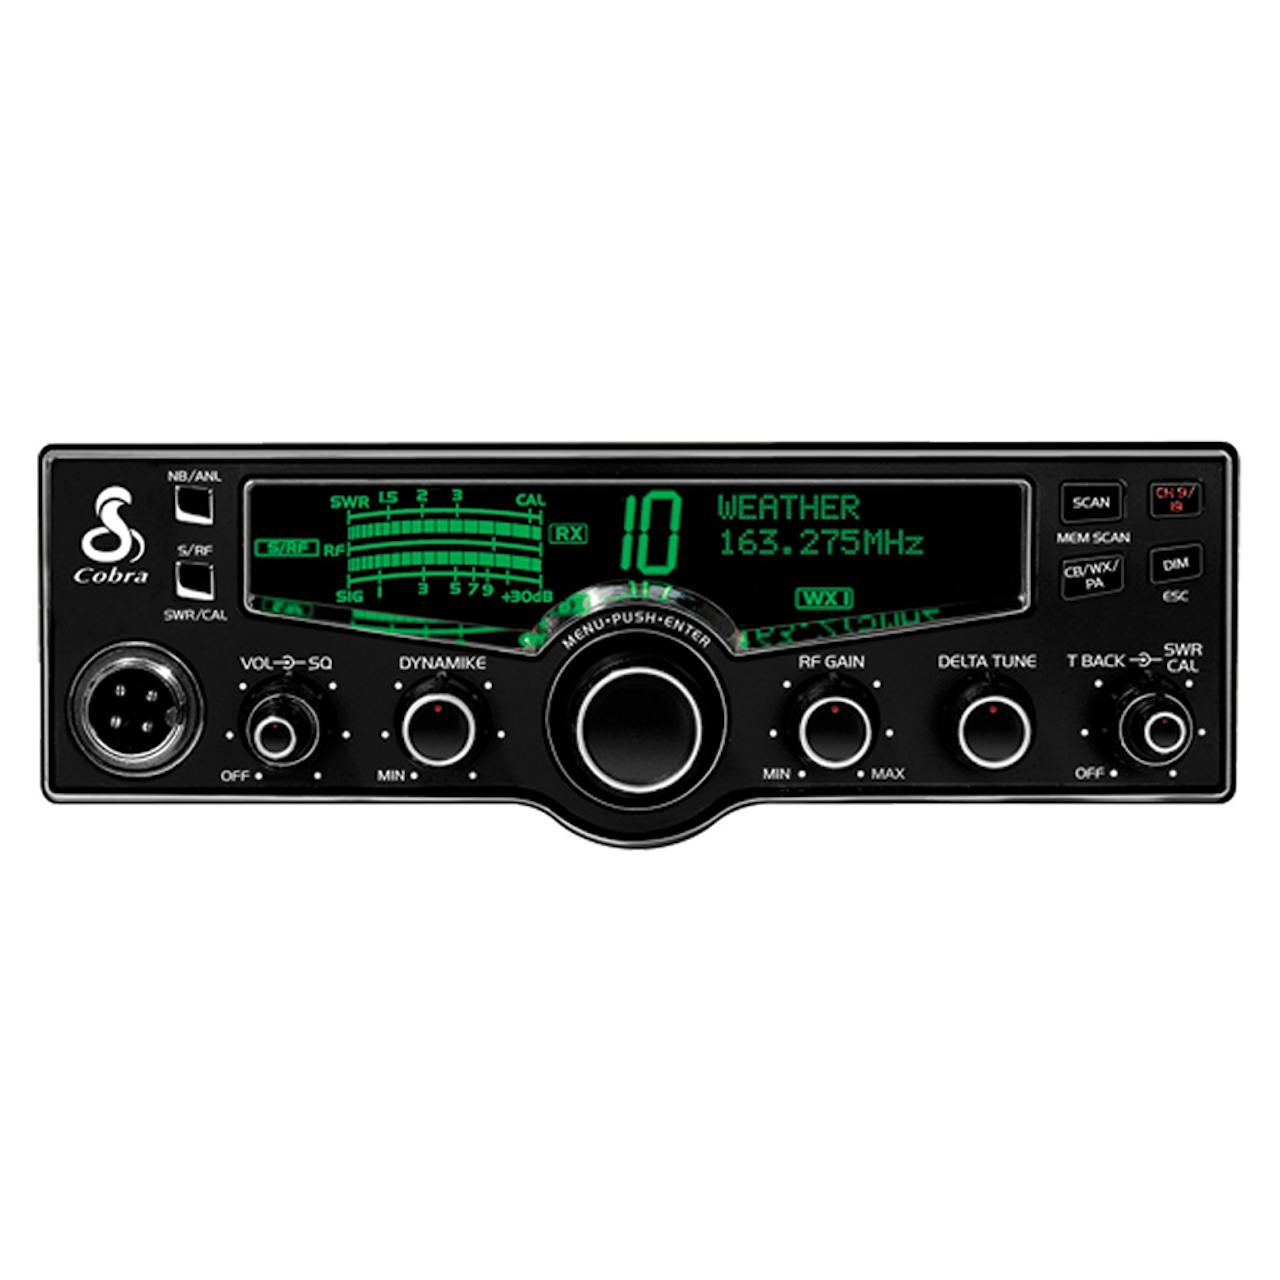 Cobra 29 LX Professional CB Radio 